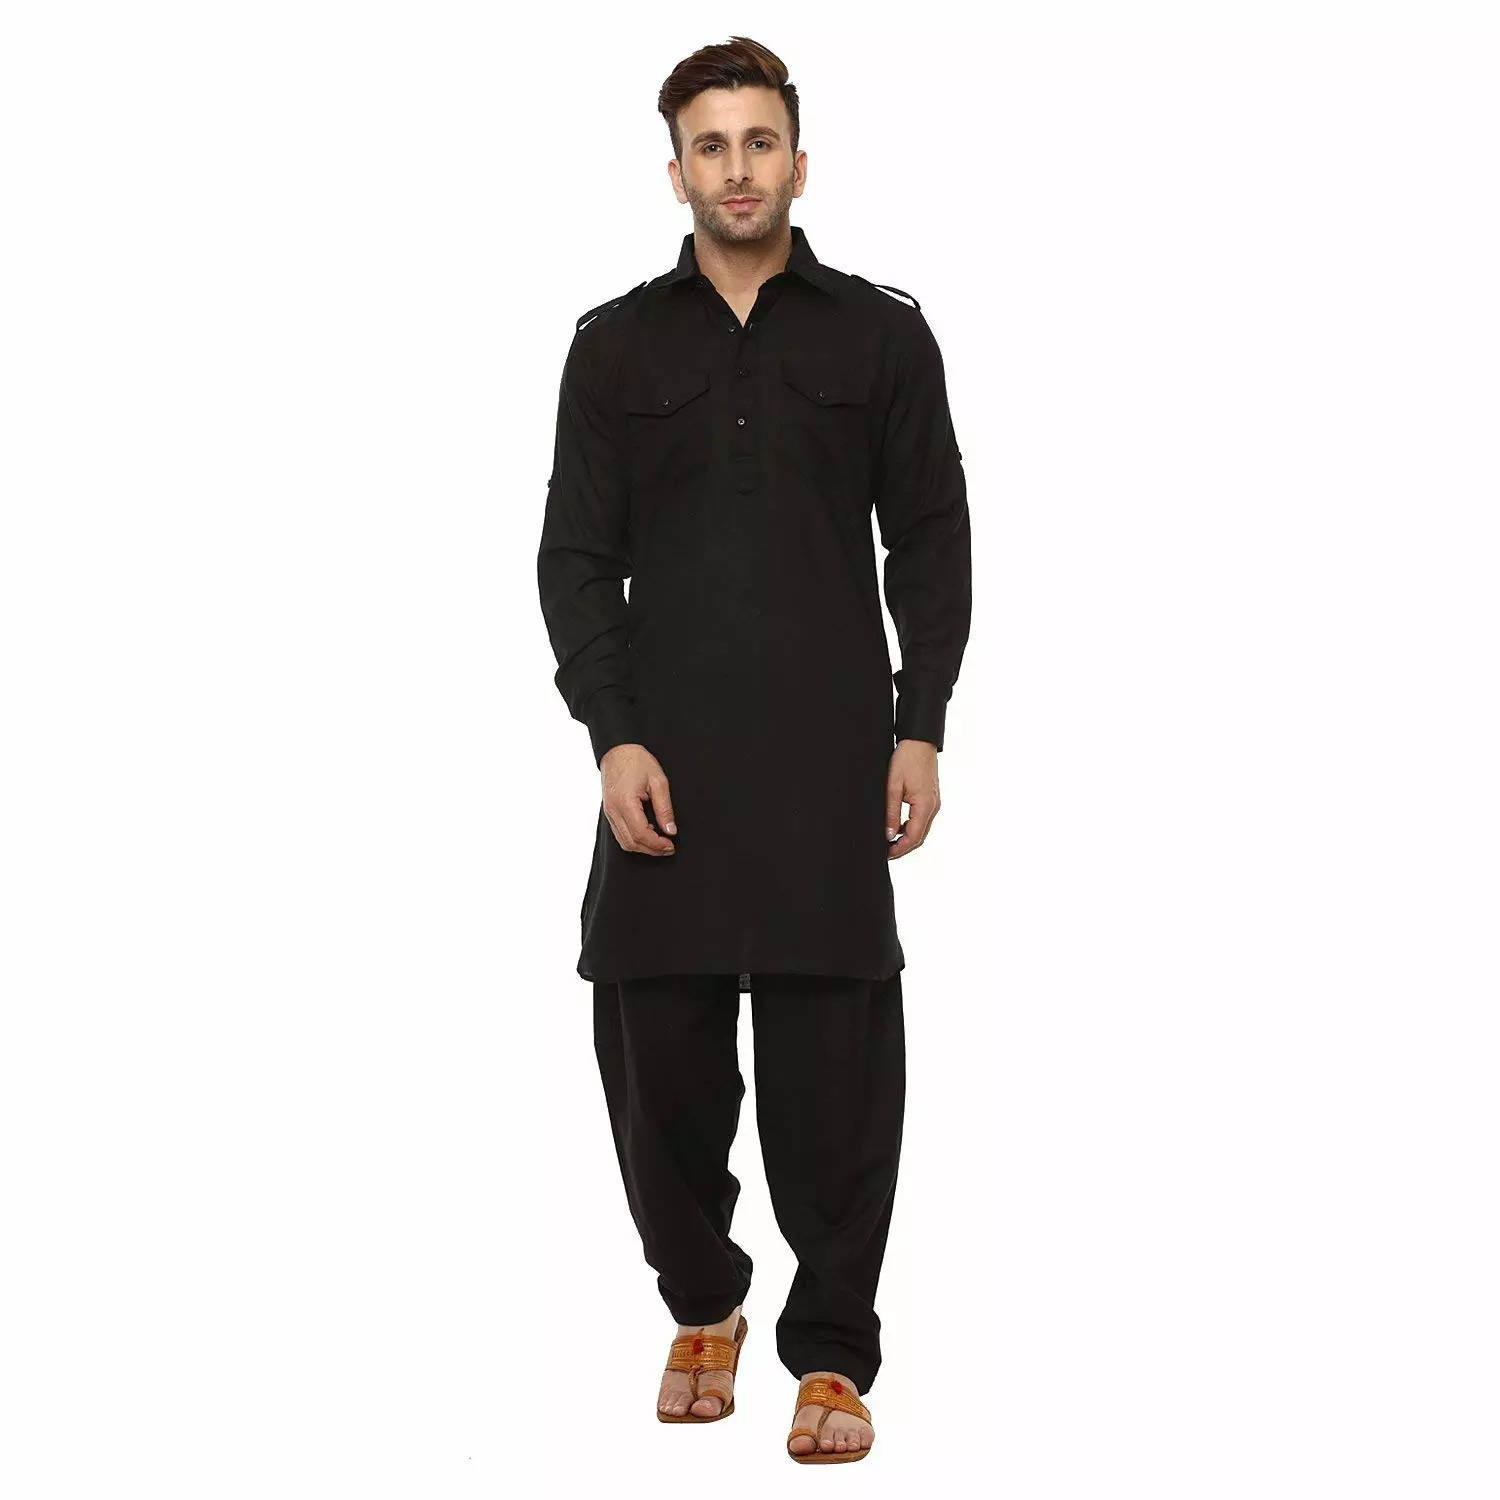 Men S Kurta, Pathani Suit With Pajama, Handmade Kurta, Kurta for Men's,  Unique Kurta, Kurta Party Wear, 100% Cotton Solid Color 2.pec Set. - Etsy |  Pathani kurta, Indian kurta, Kurta cotton